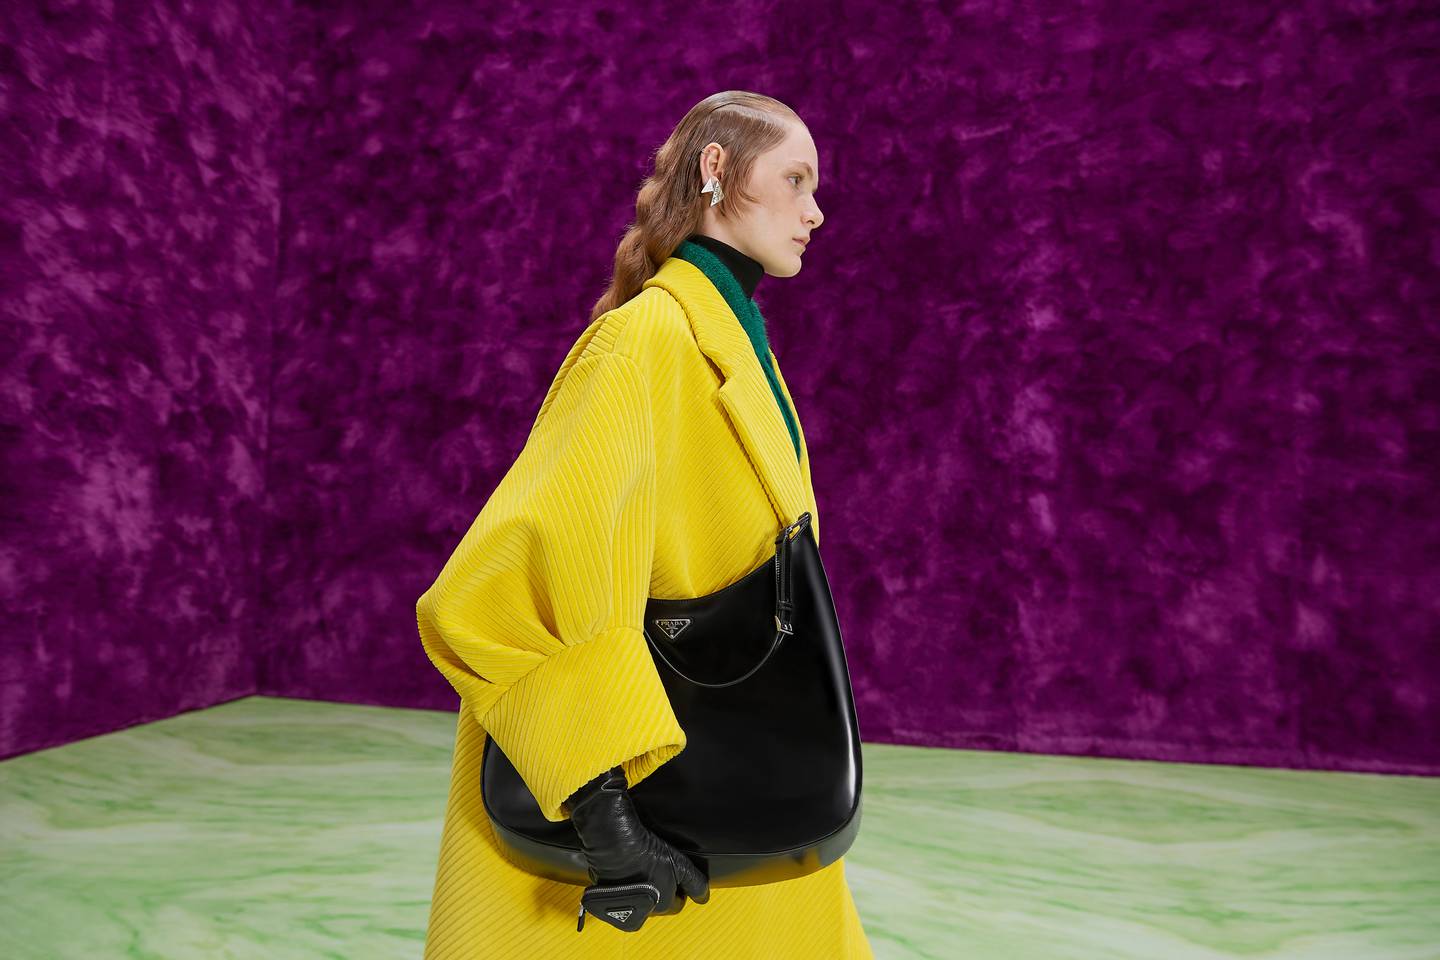 A model carries Prada's Cleo bag in Miuccia Prada and Raf Simons' Fall/Winter 2021 show.